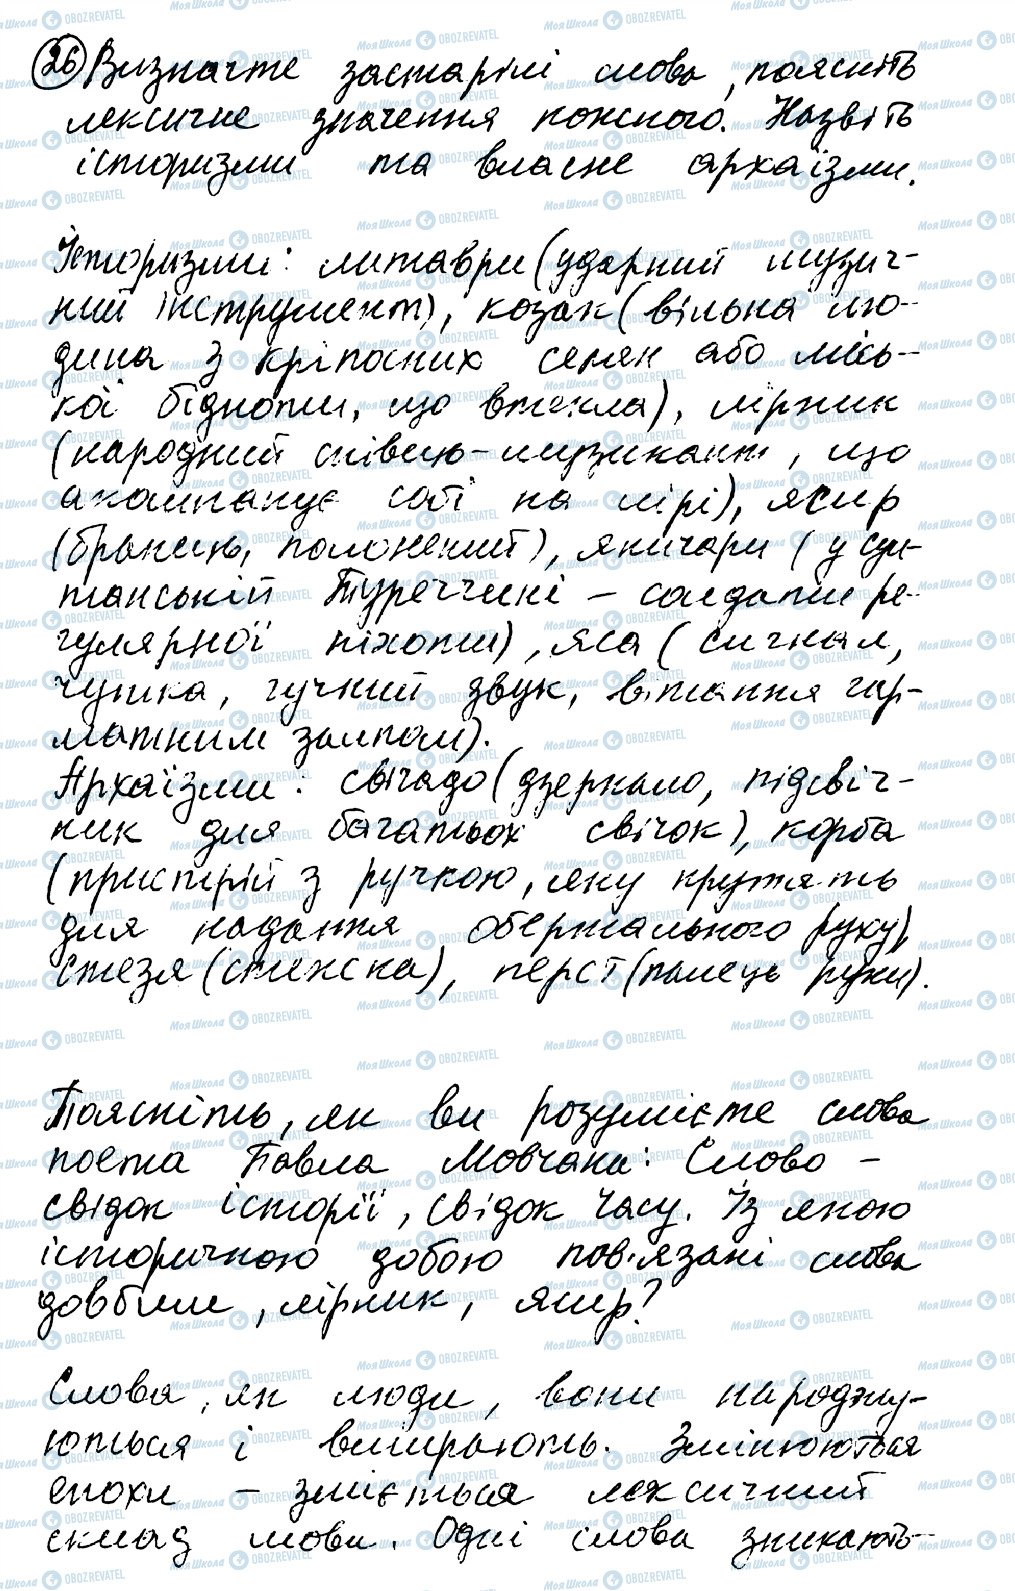 ГДЗ Укр мова 8 класс страница 26